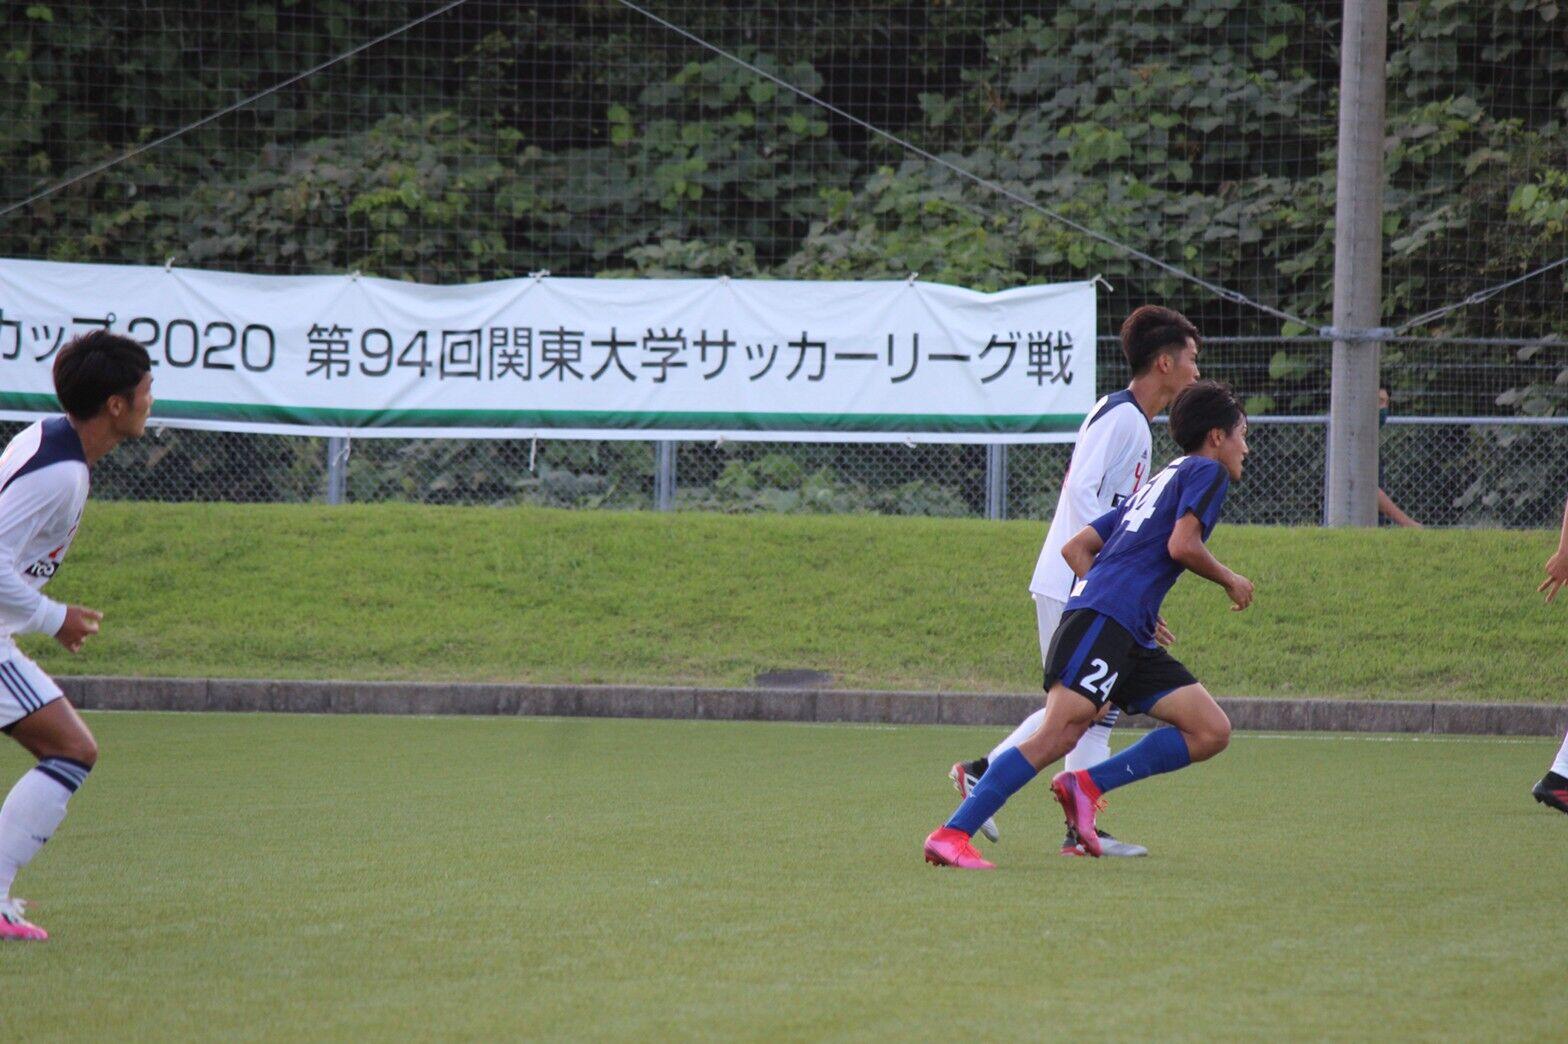 https://football.ku-sports.jp/blog/photoreport/images/20200917194547.jpg